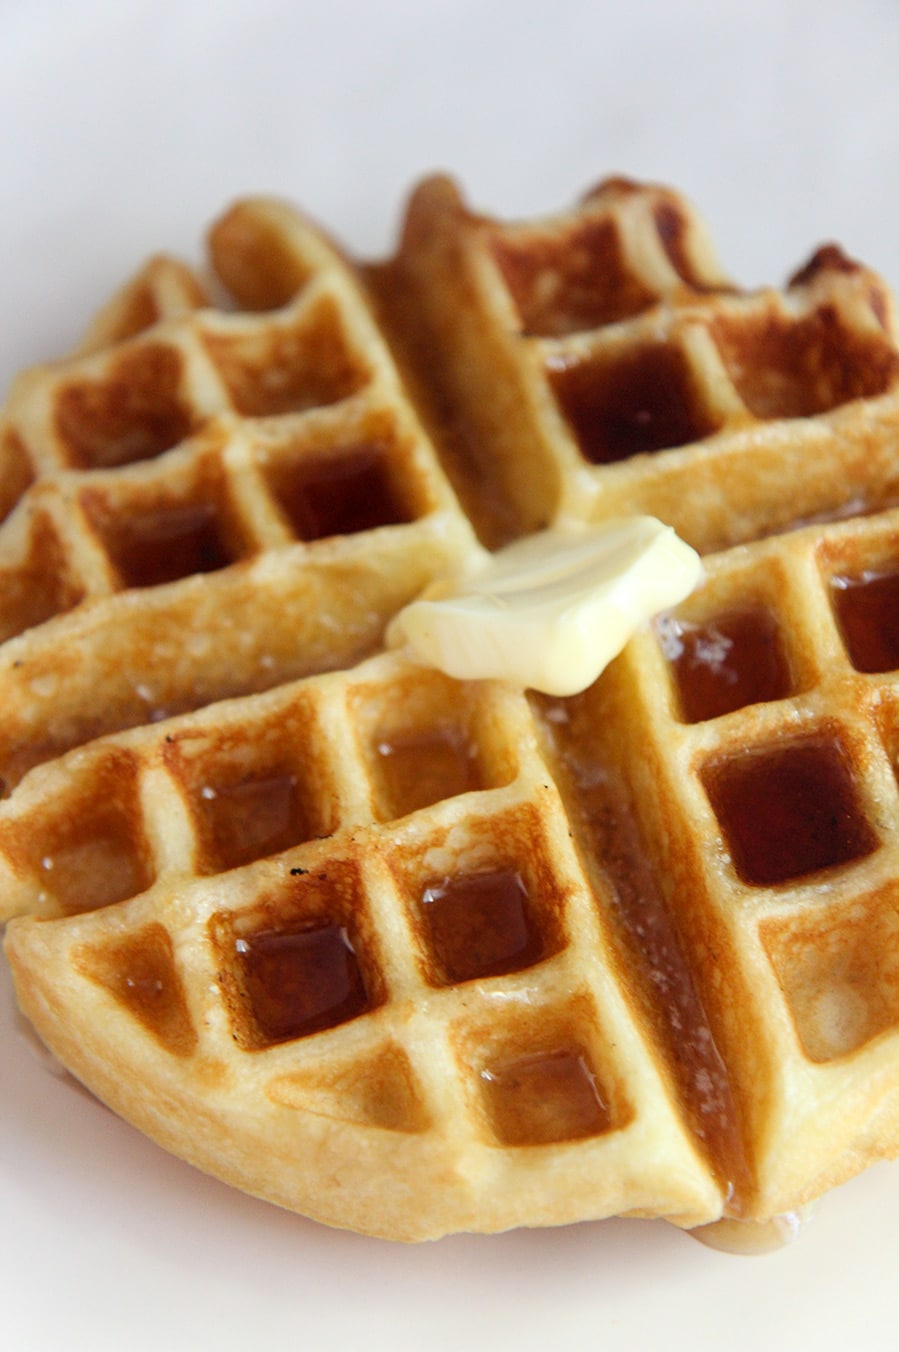 https://www.cookedbyjulie.com/wp-content/uploads/2020/08/buttermilk-waffles-one.jpg